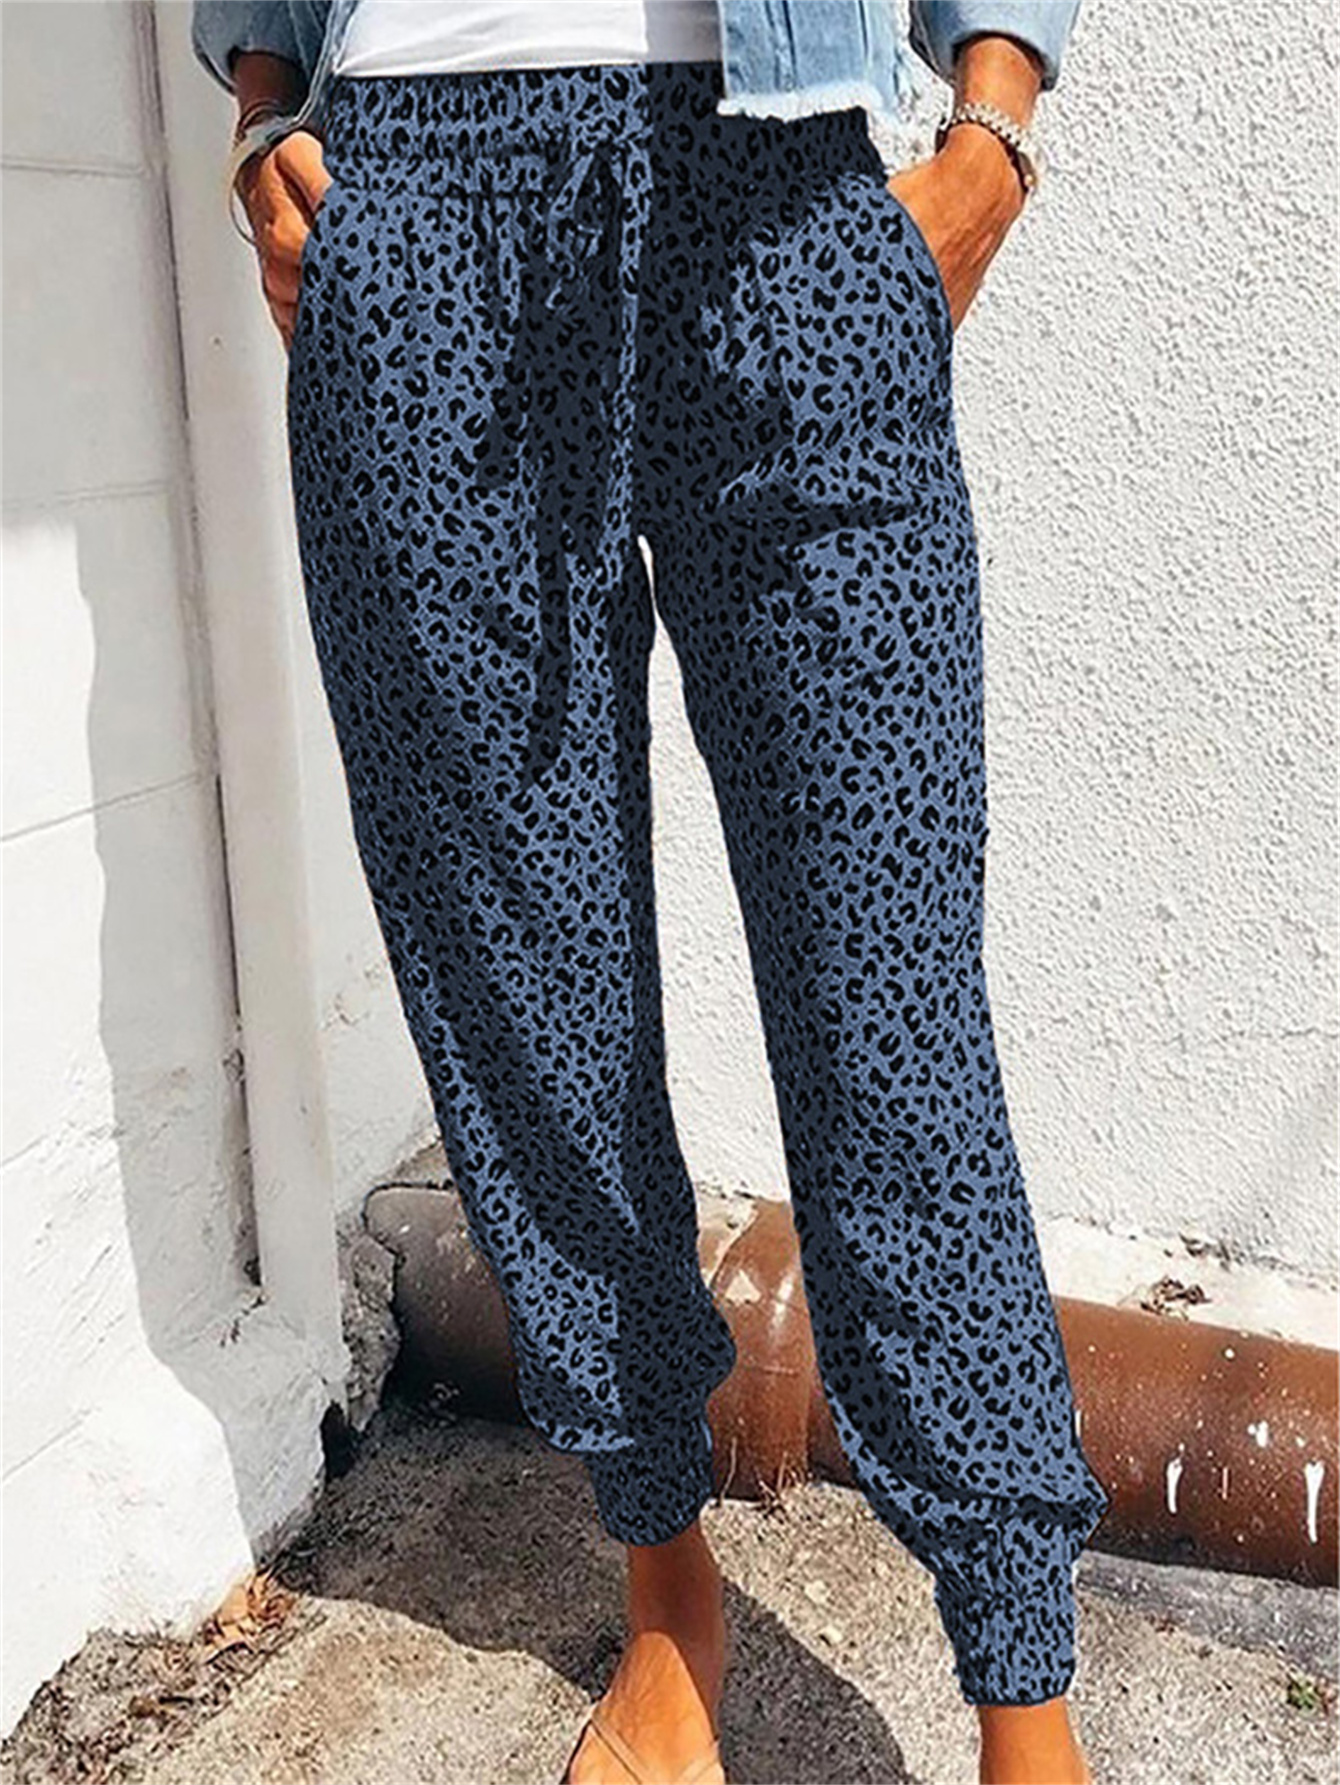 Women'S Casual Pants Casual Trousers Summer Leopard Print Pants Bottoms  Pants